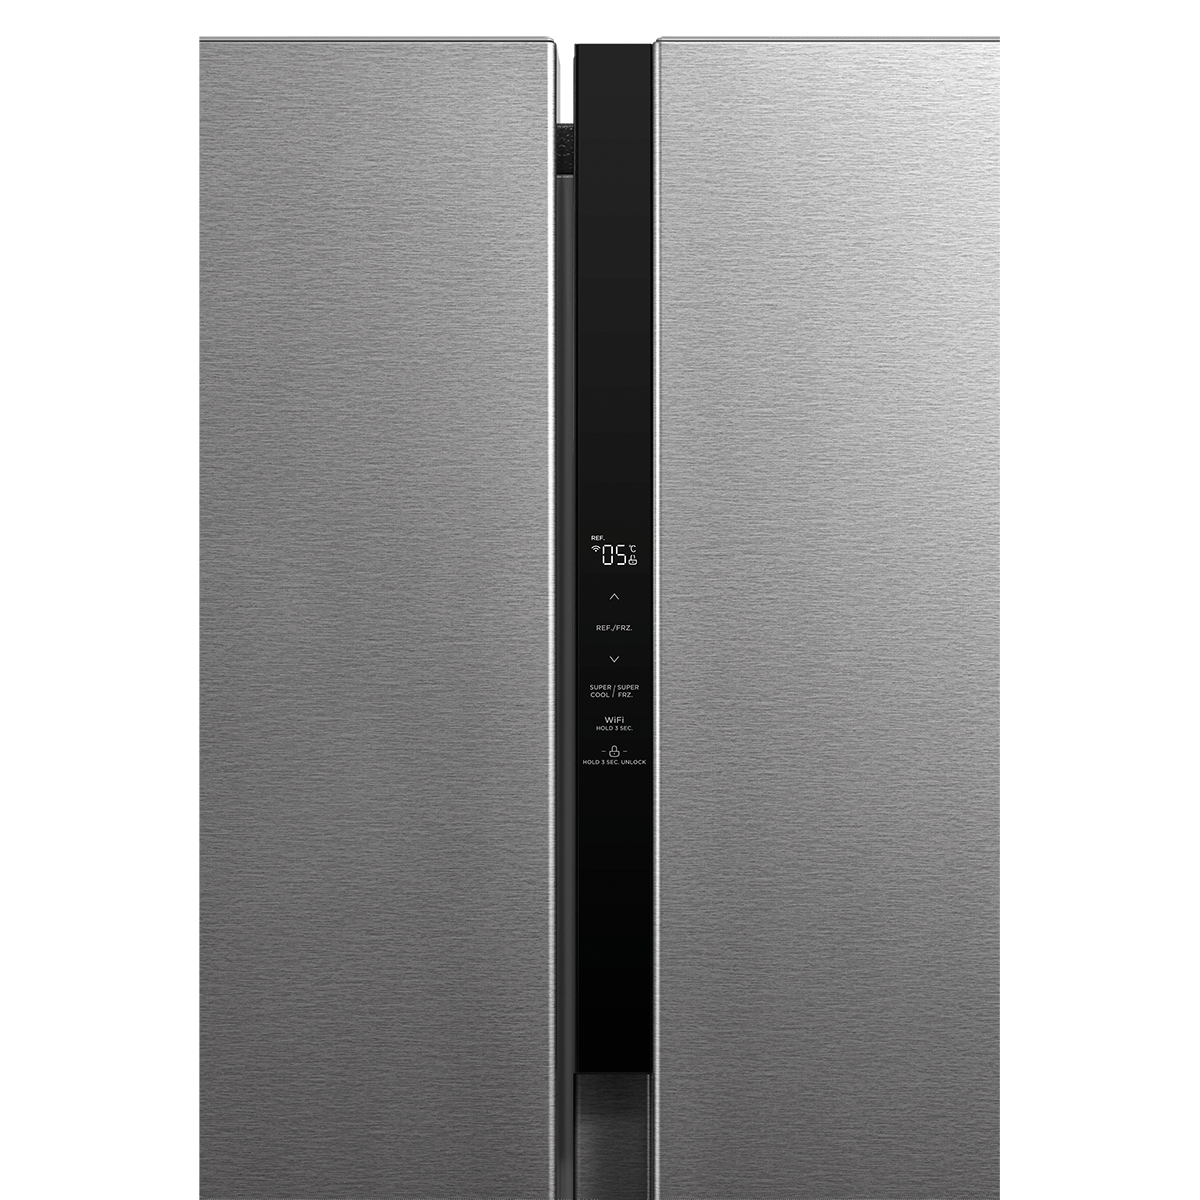 Toshiba 18Q Side by Side Refrigerator